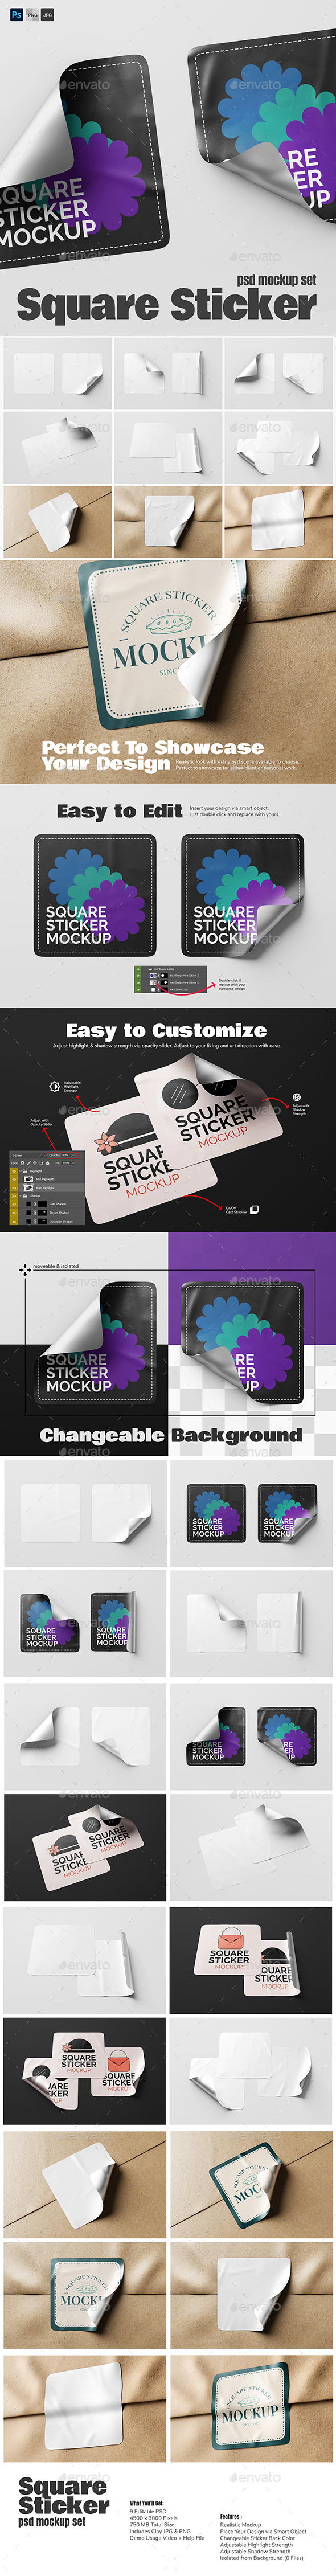 Square Sticker Label Mockup - 9 PSD